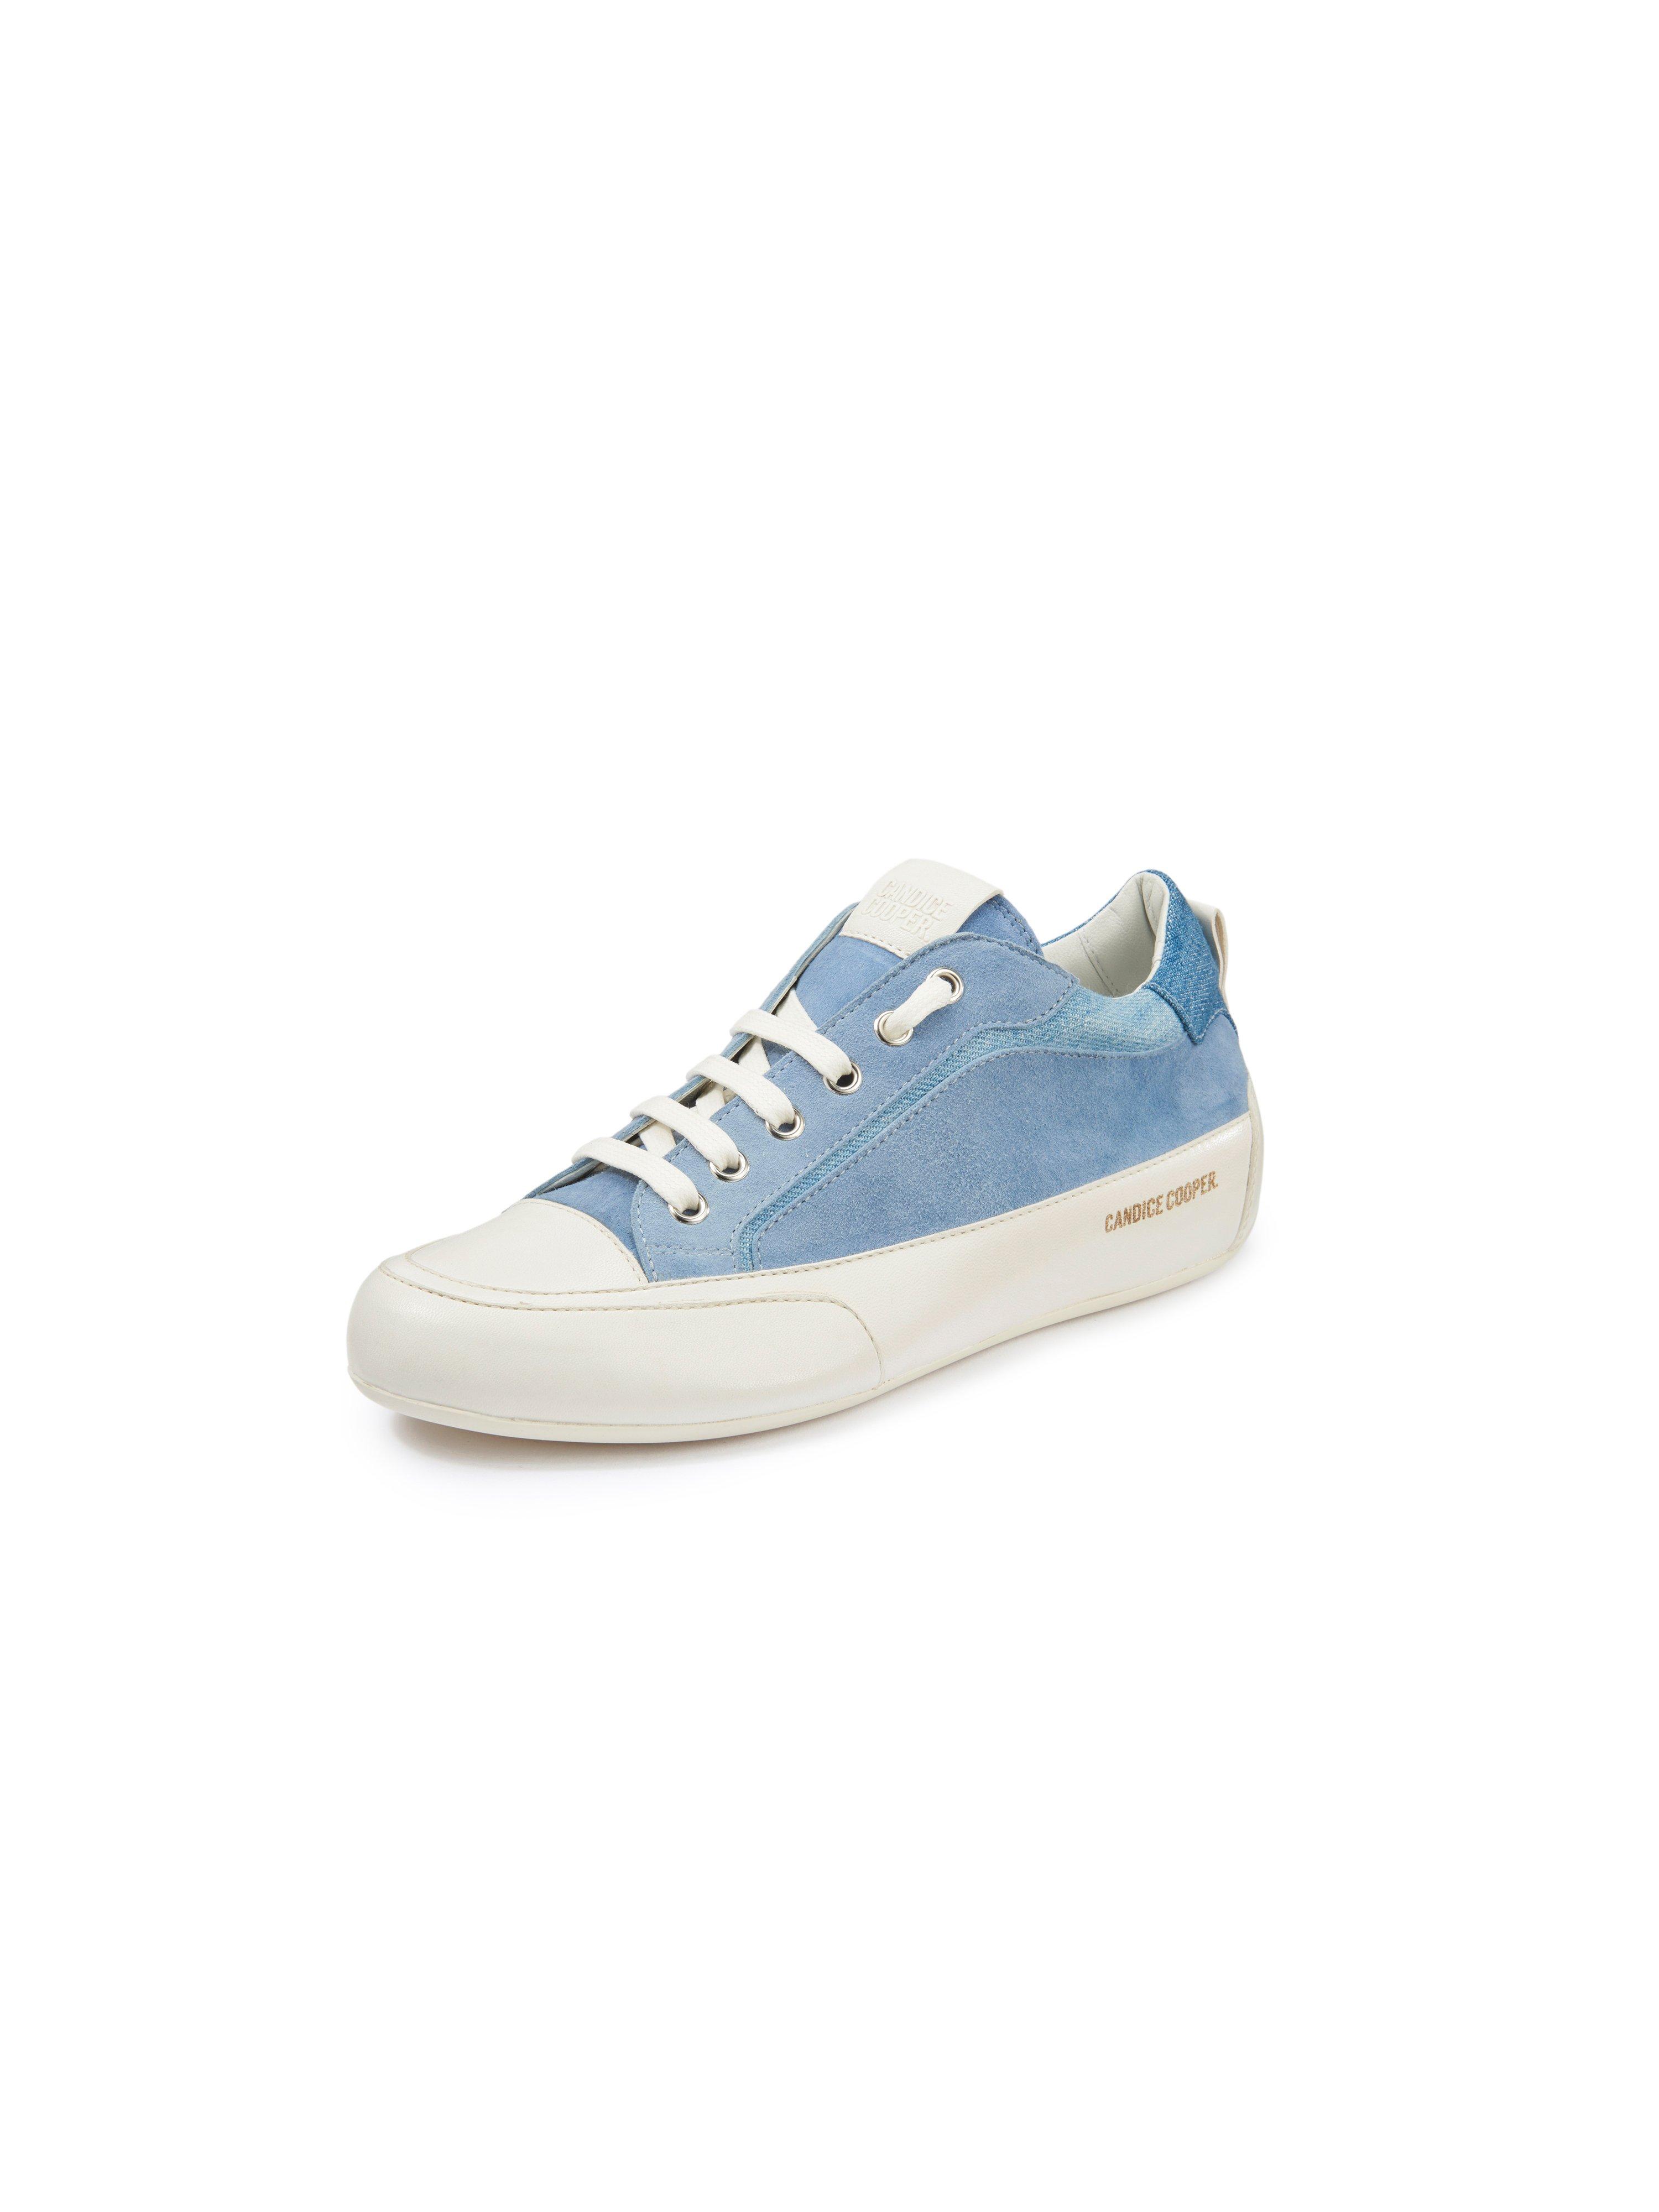 Sneakers Kendo Candice Cooper blue